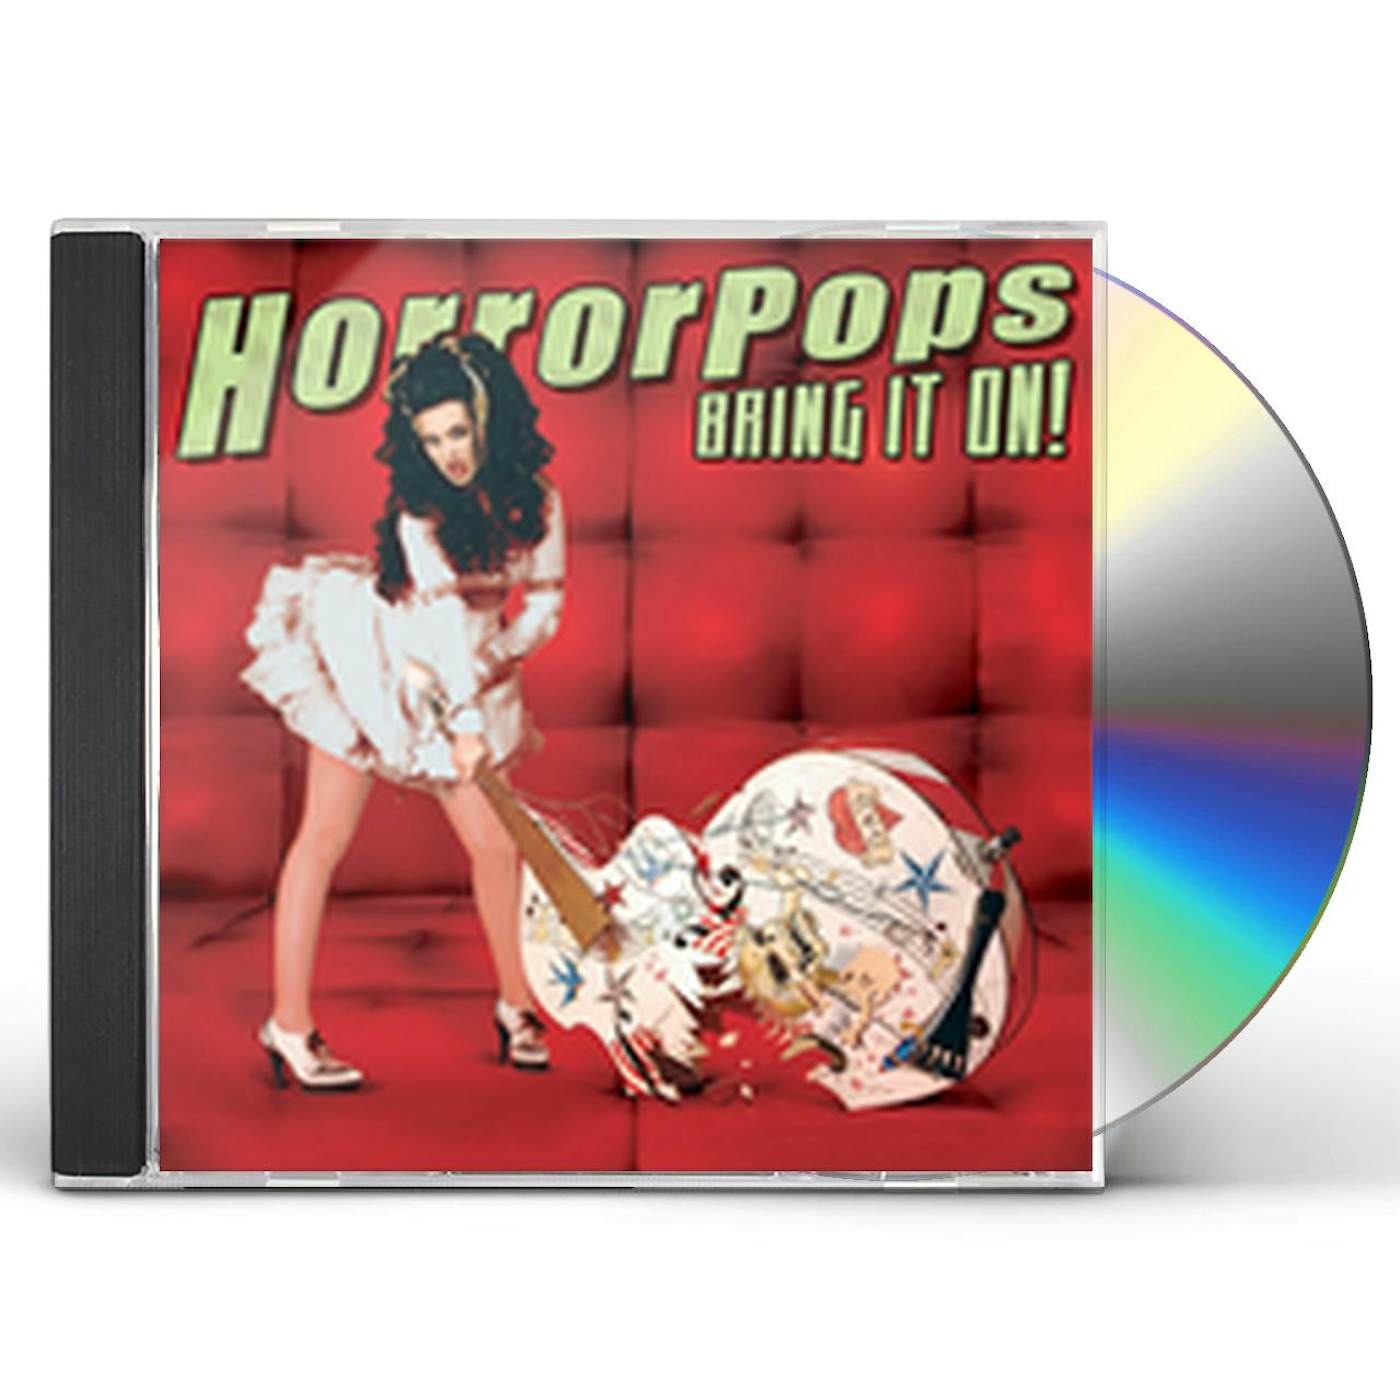 Horrorpops BRING IT ON CD